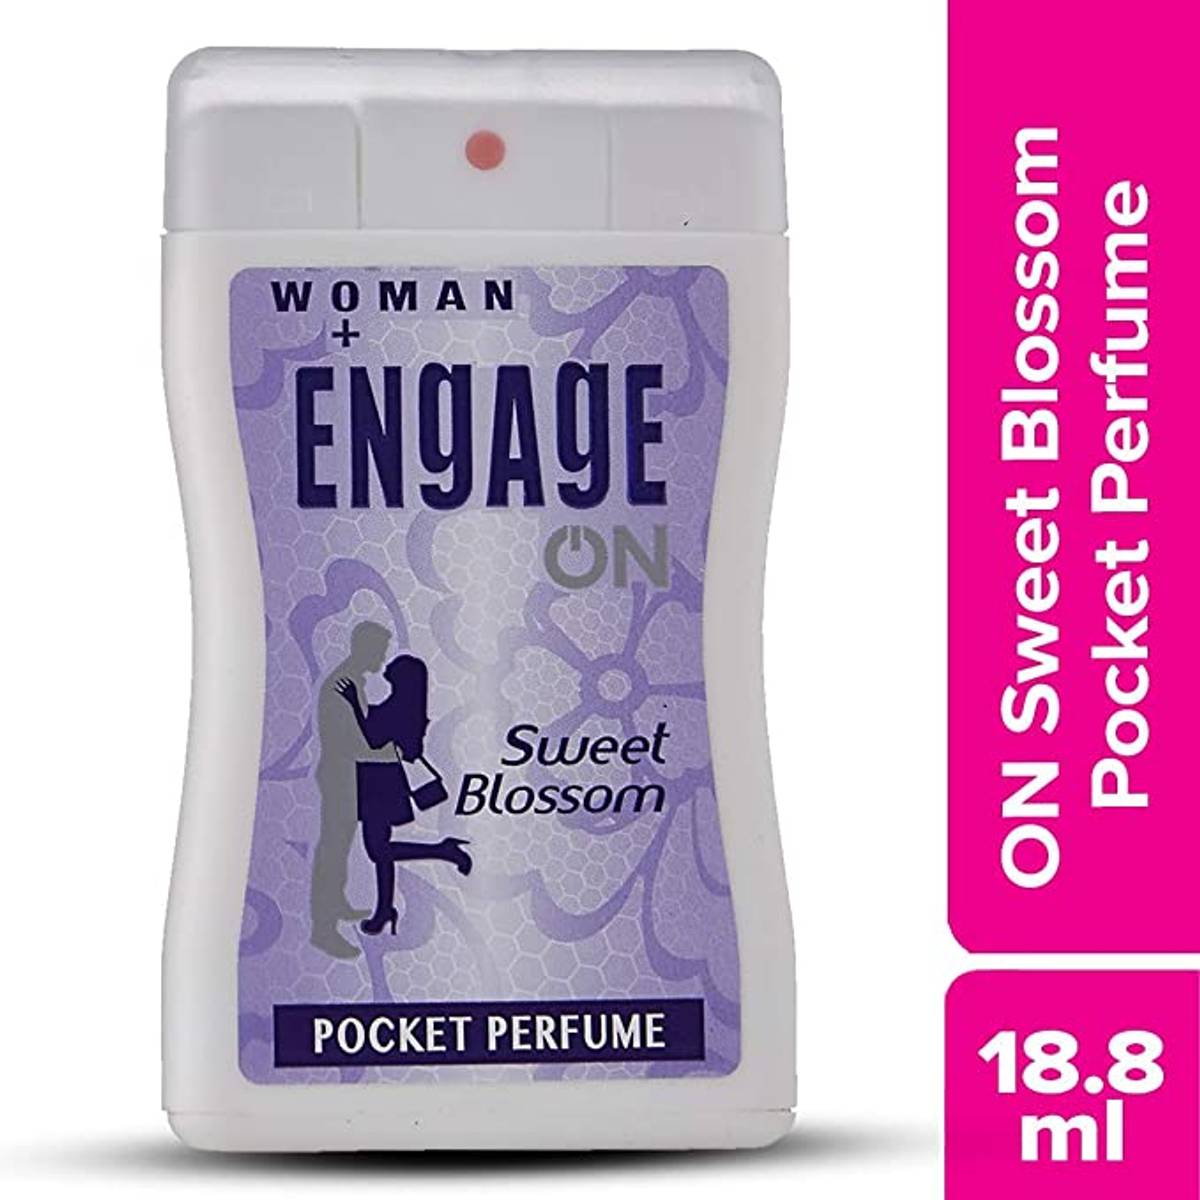 Engage on Pocket Perfume- women, Sweet Blossom 171ml